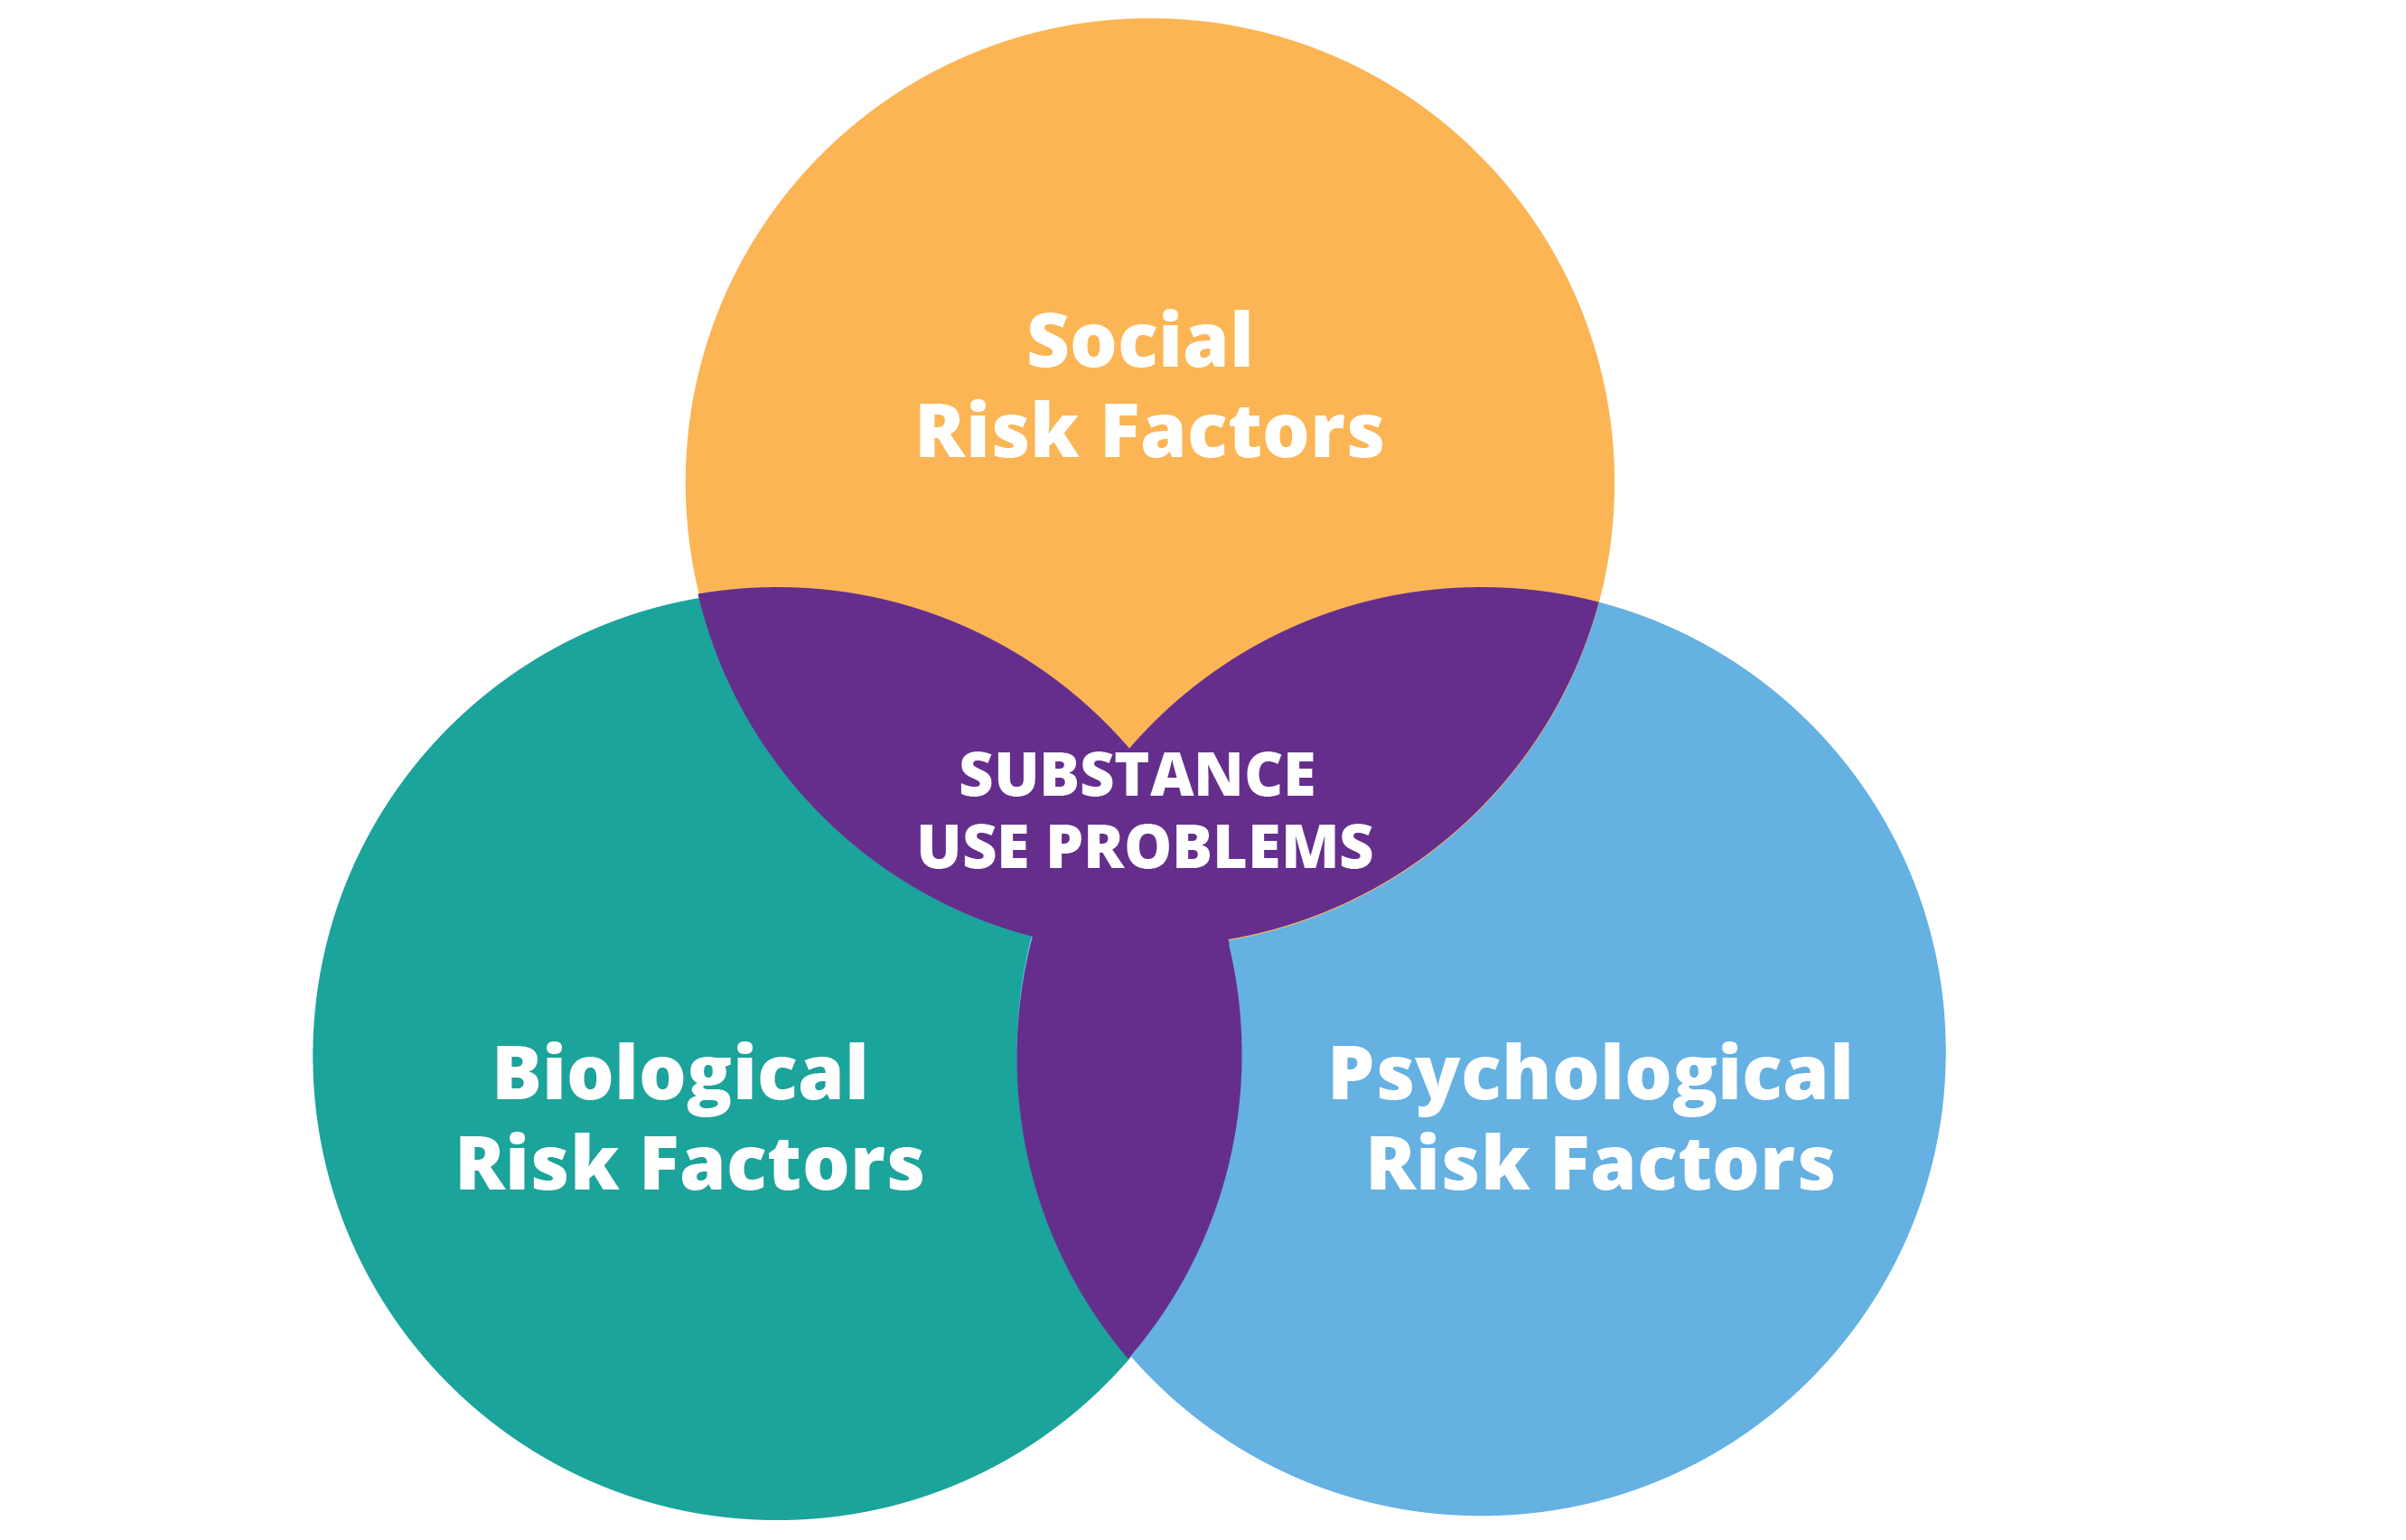 Venn diagram of risk factors for substance use problems which includes: social risk factors, biological risk factors, and psychological risk factors that intersect to create substance use problems.